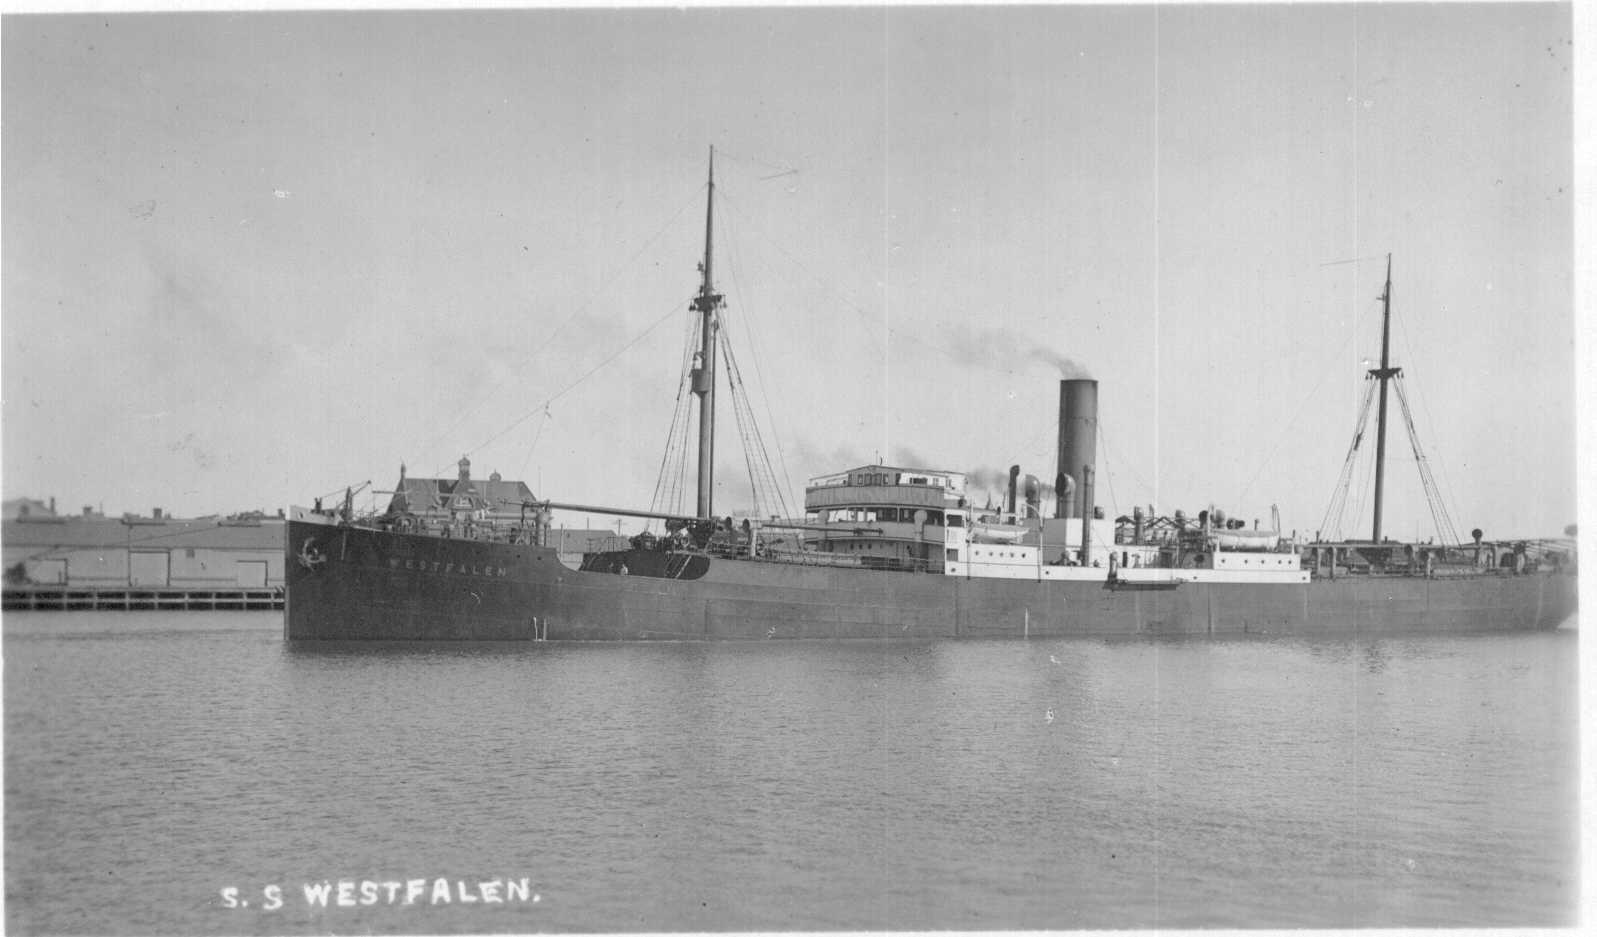 Refrigerated Cargo vessel "Westfalen", built in 1906 by J.C. Tecklenborg A.G. - Geestemünde.  Owned by Norddeutscher Lloyd.
Tonnage:  5665 gross, 3584 net
Dimensions:  length 406'0", breadth 52'7", draught 27'9"
Port Of Registry:  Bremen
Flag:  German